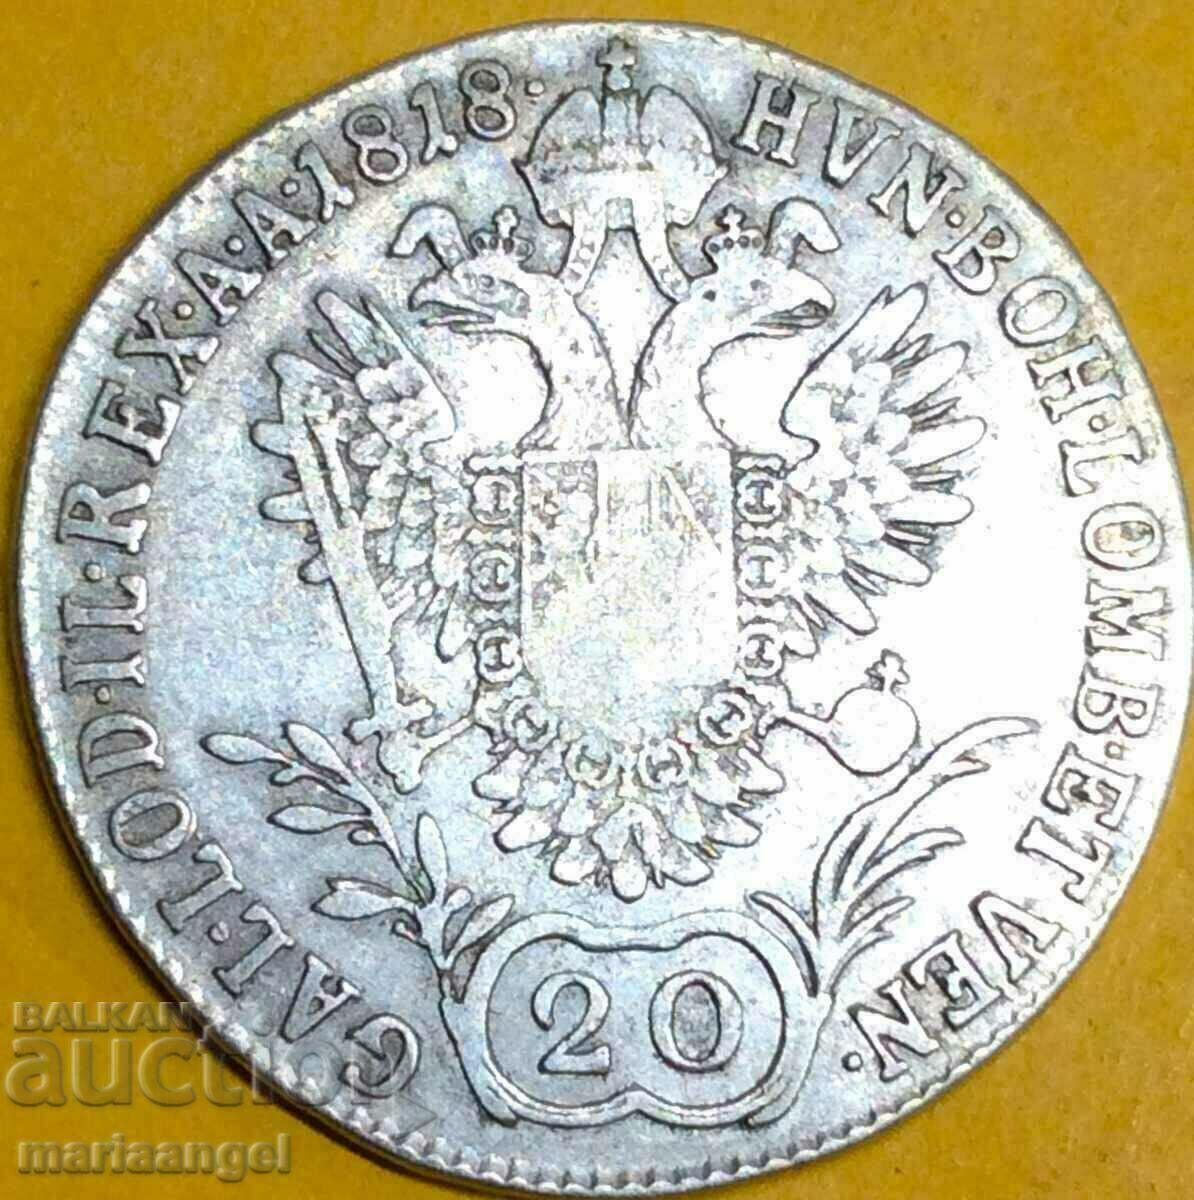 20 Kreuzer 1818 Austria A - Vienna Hungary silver